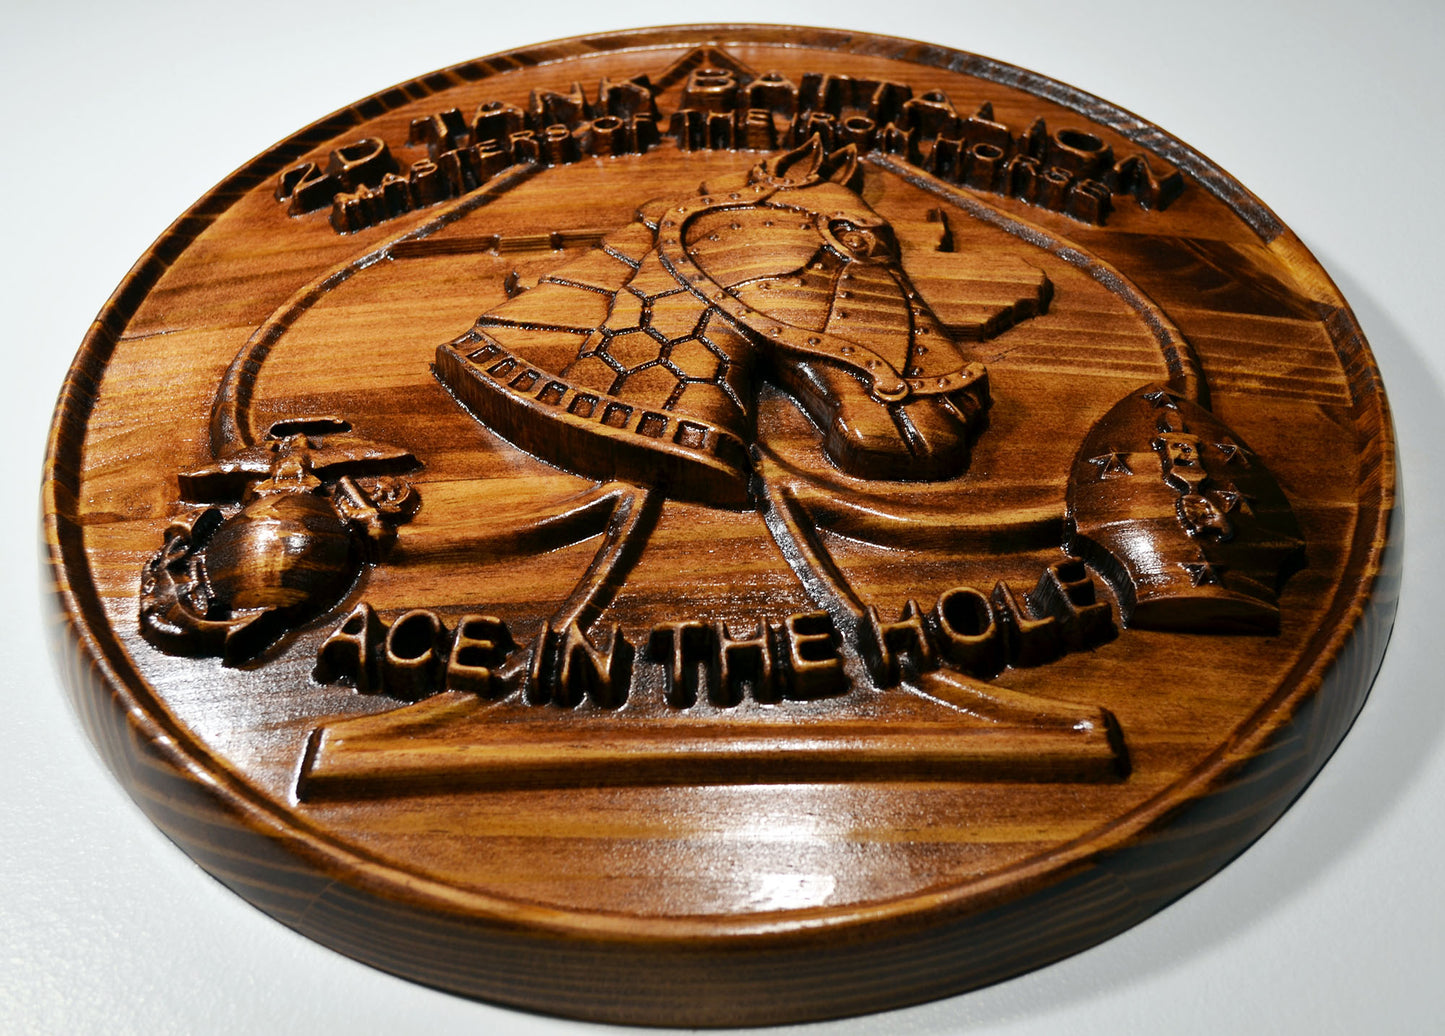 USMC 2nd Tank Battalion,  US Marine Corps, CNC 3d wood carving, military plaque